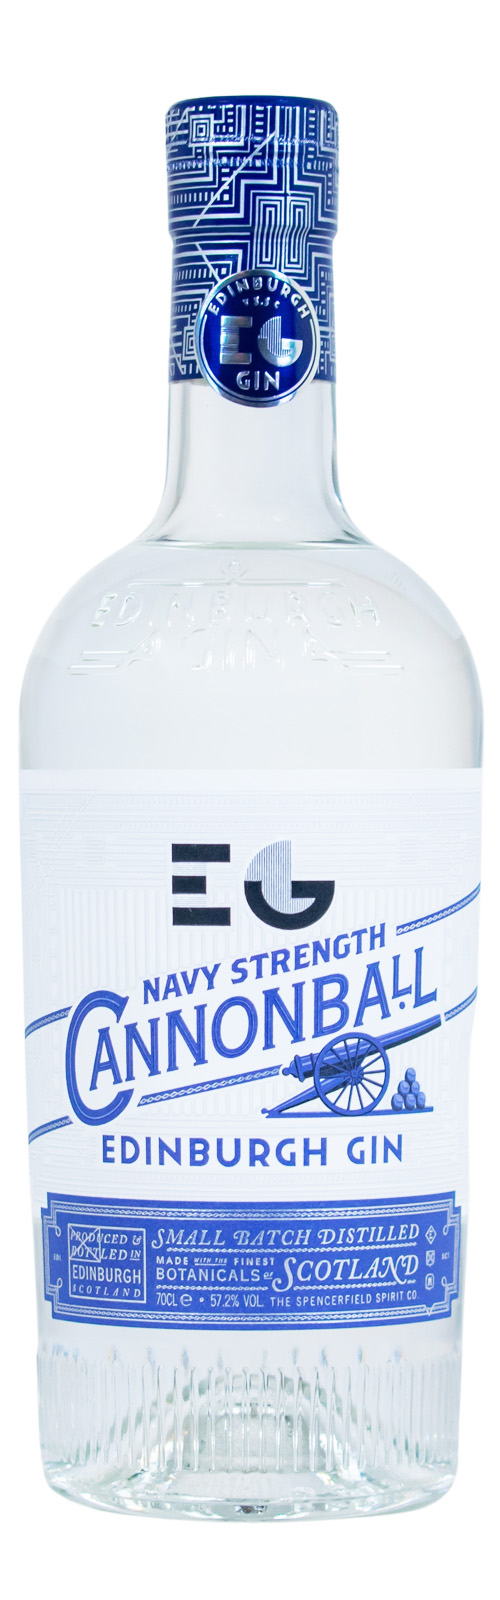 Edinburgh Cannonball Navy Strength Gin - 0,7L 57,2% vol